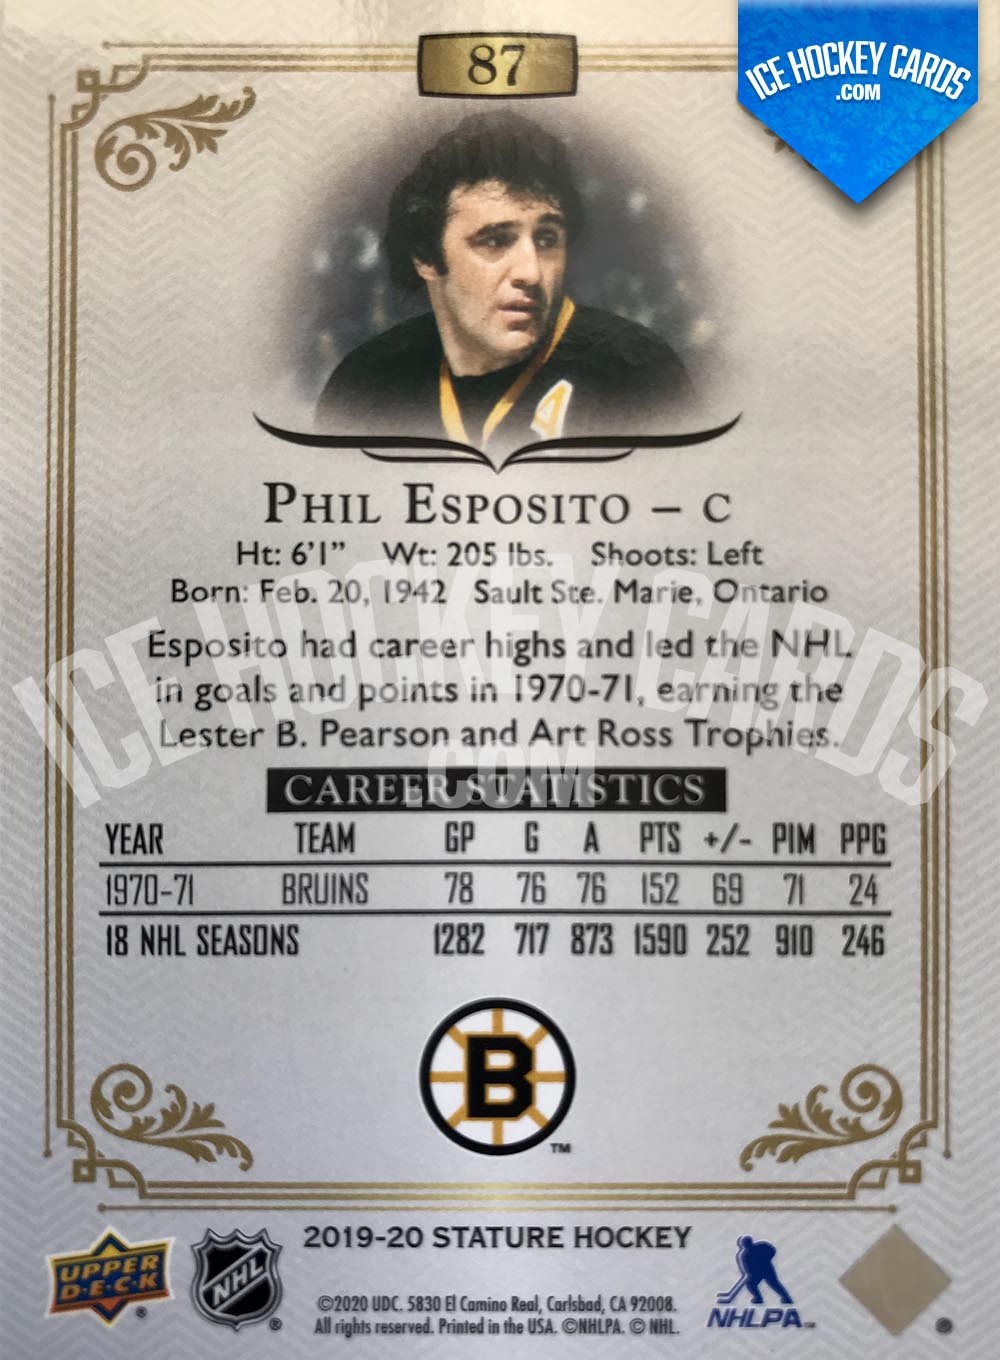 Upper Deck - Stature 2019-20 - Phil Esposito Base Card back